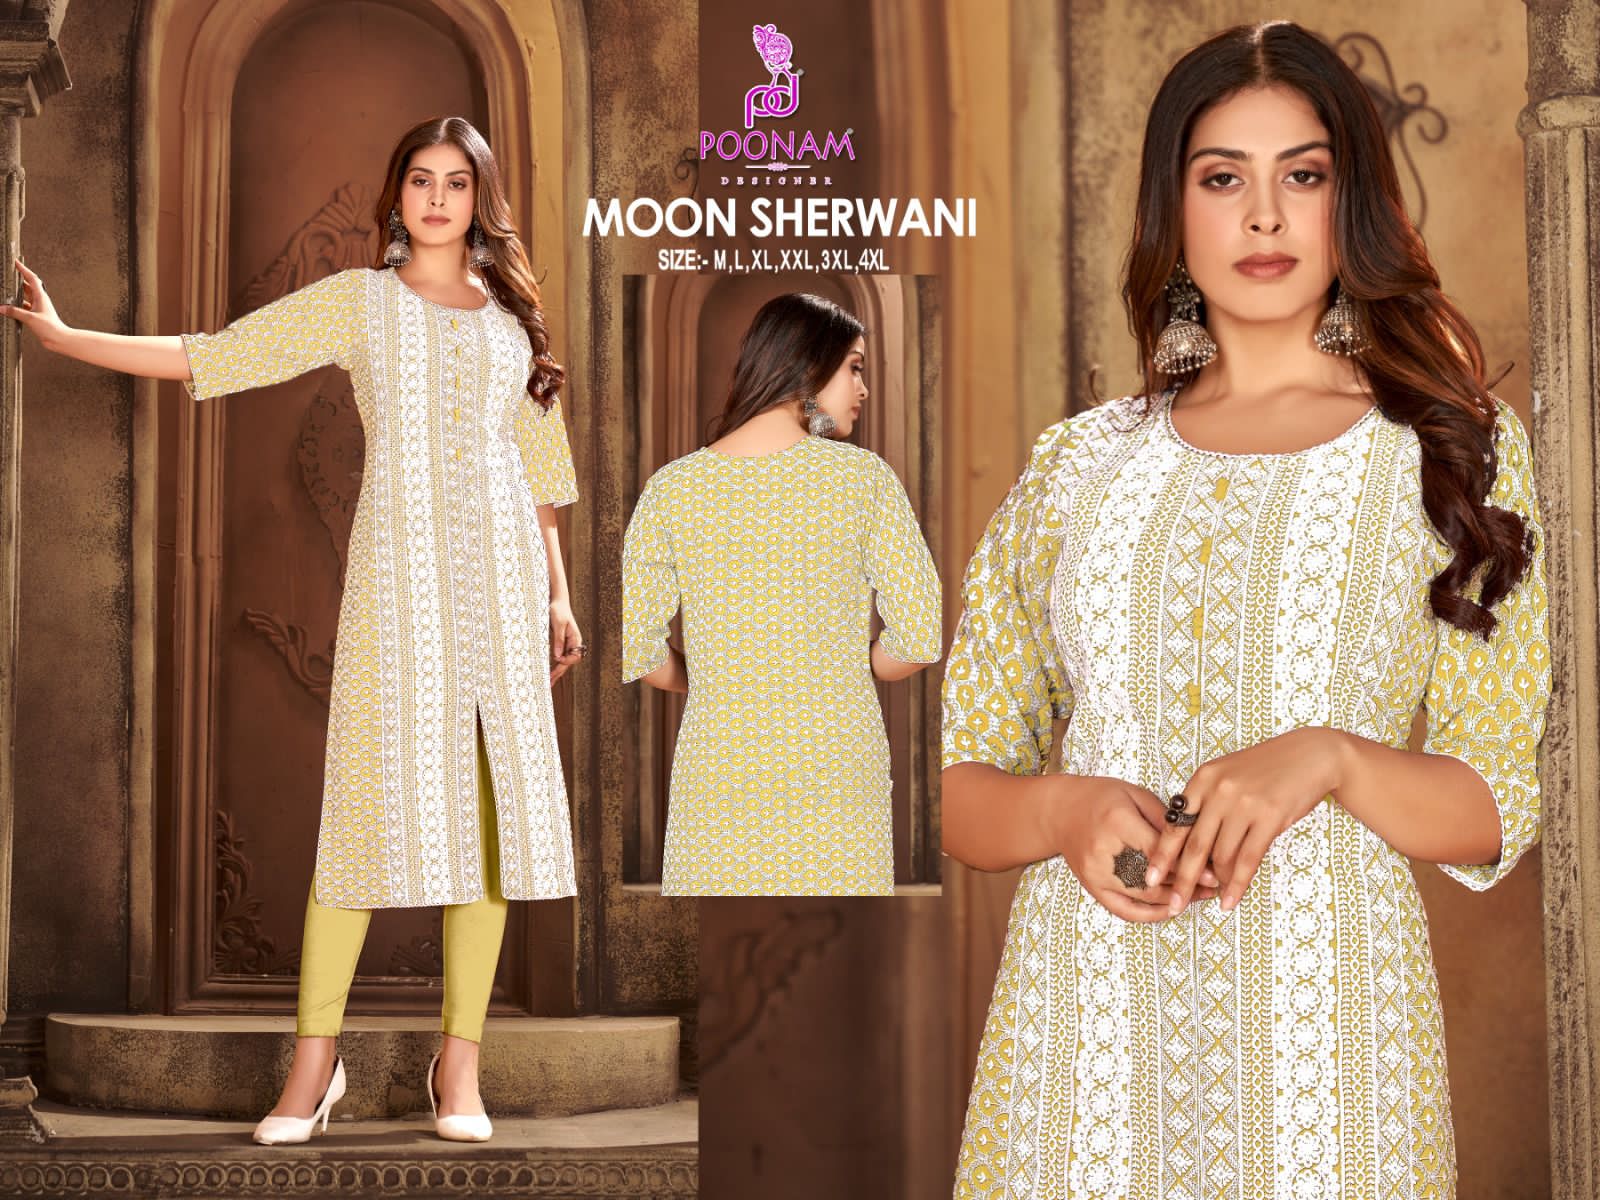 Poonam Moon Sherwani collection 1